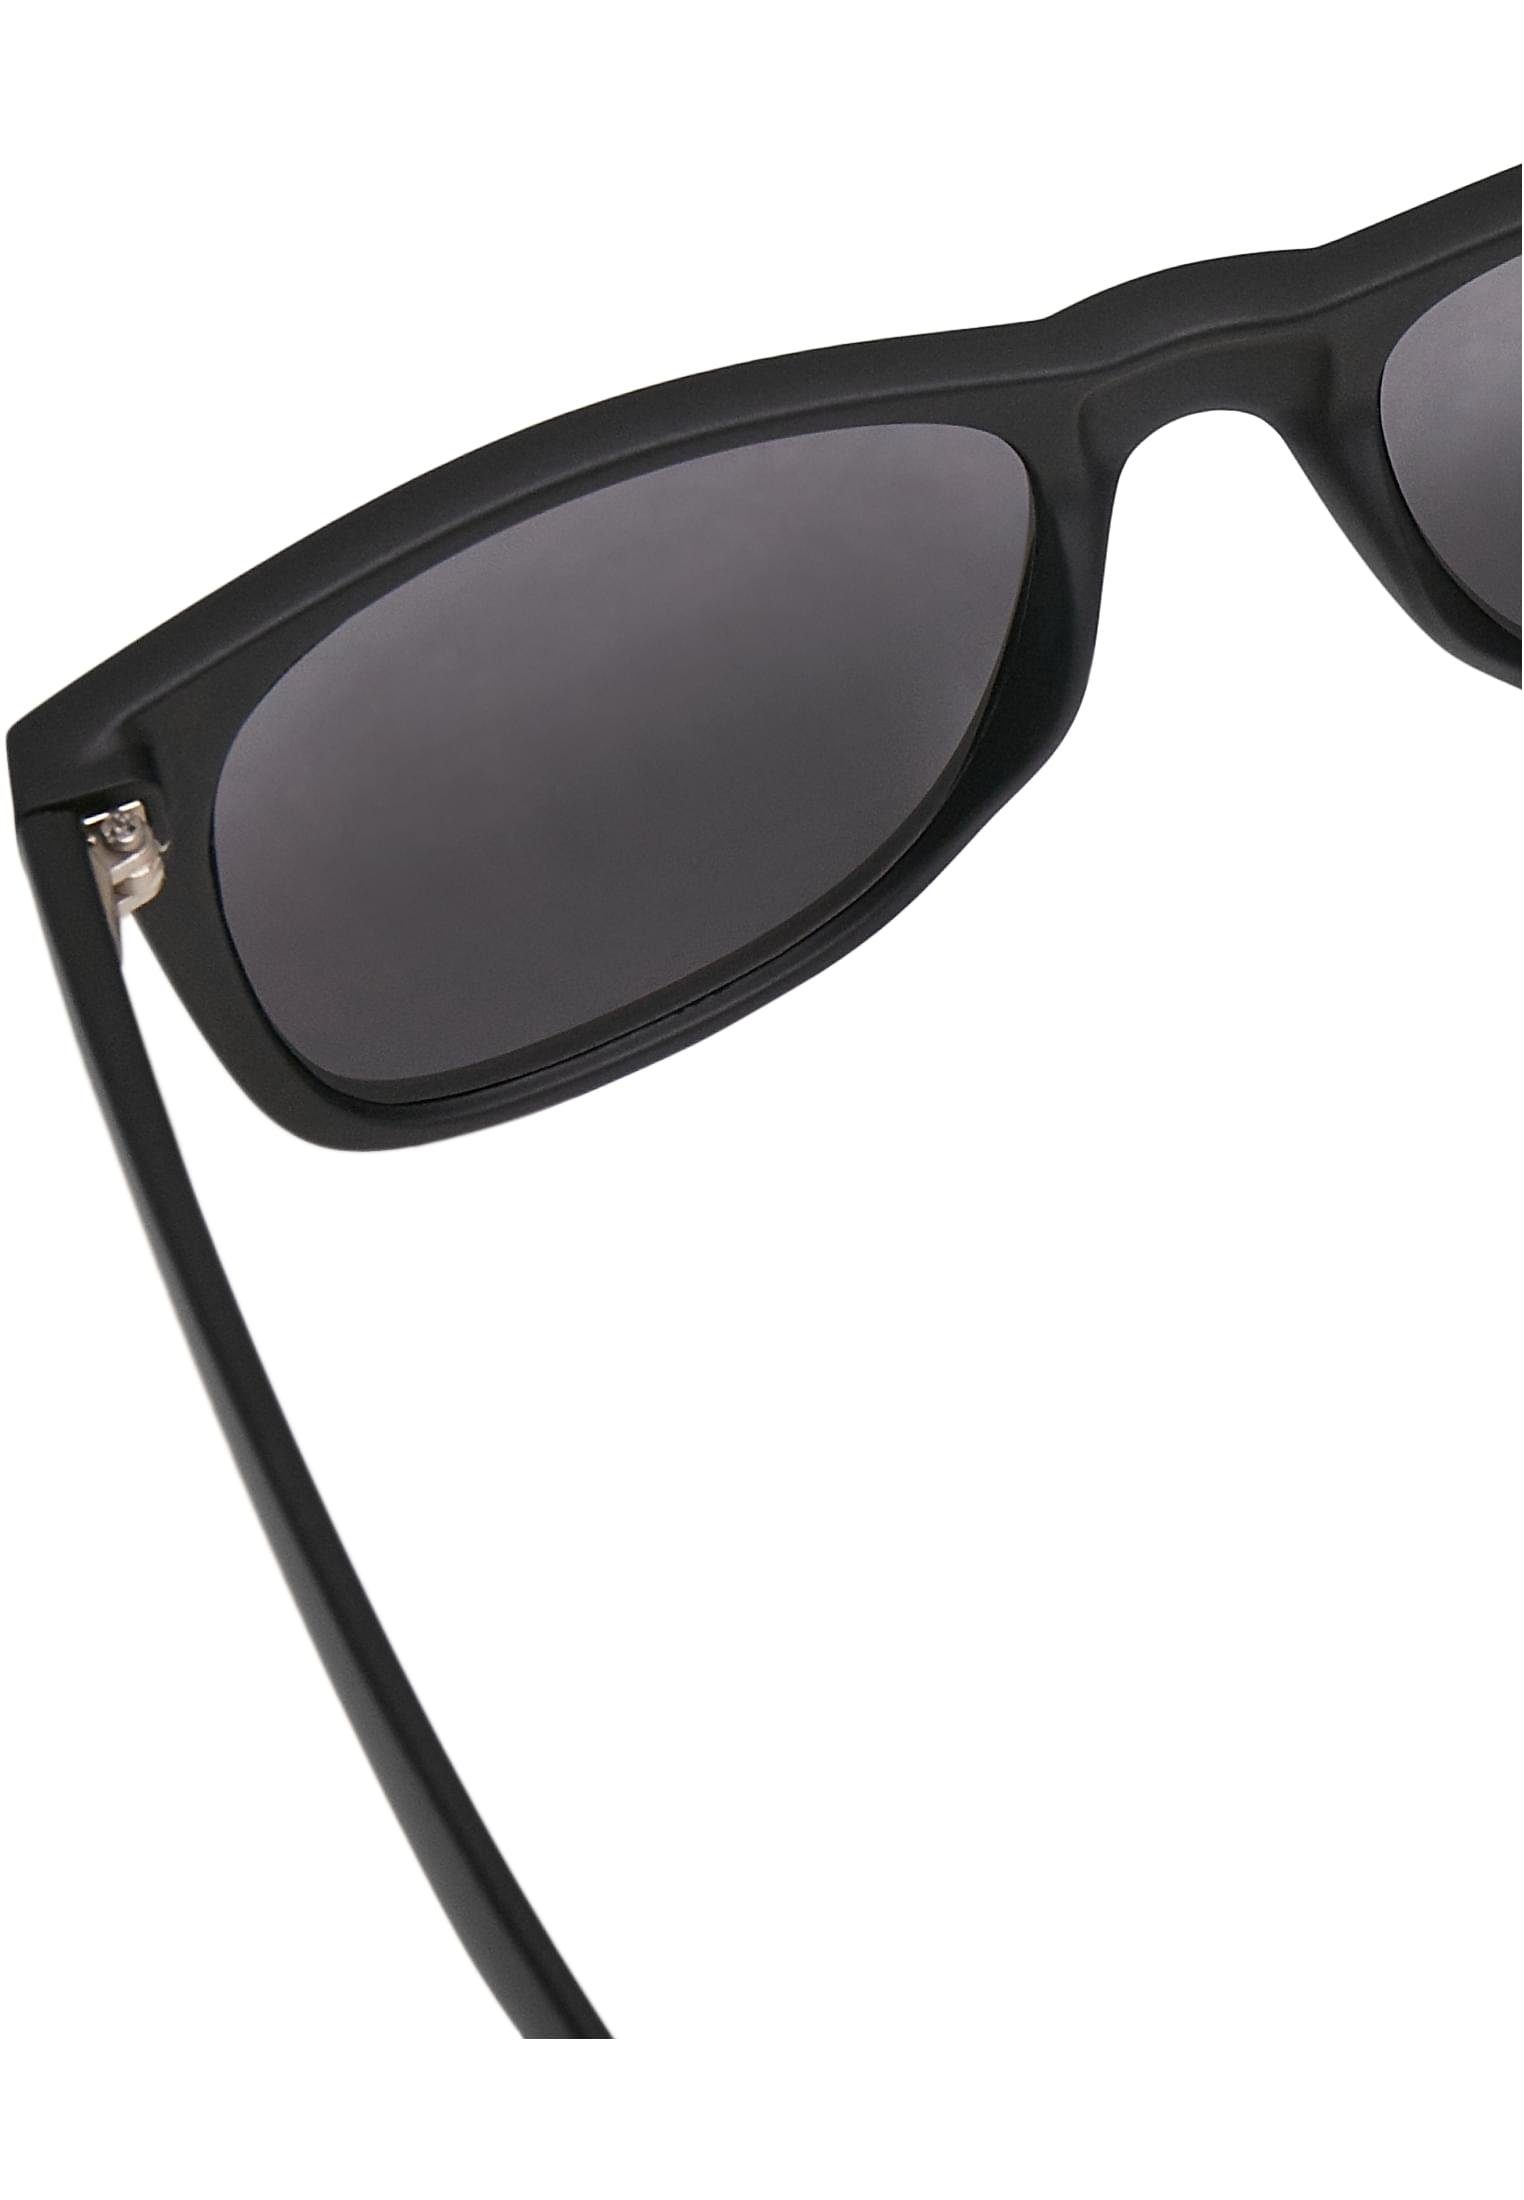 Sonnenbrille Likoma CLASSICS Sunglasses UC black URBAN Accessoires